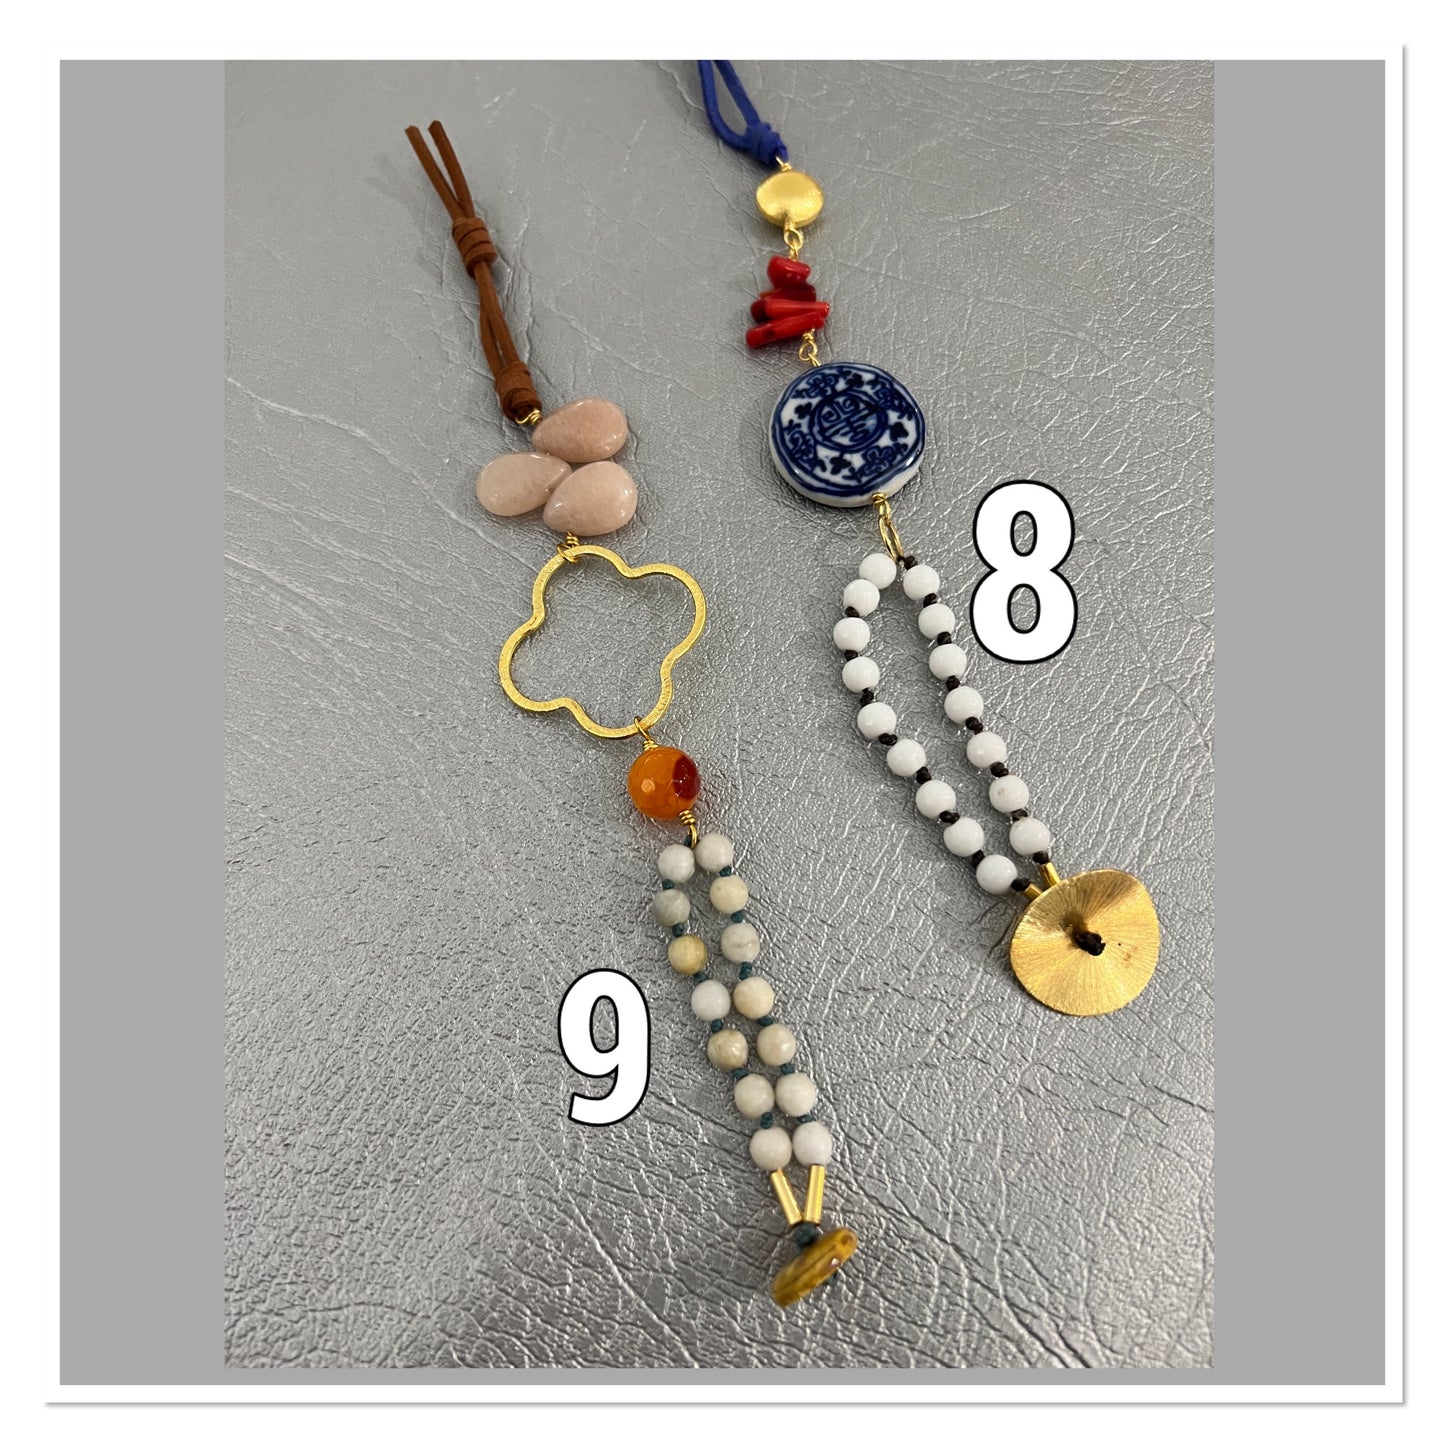 Kits for bracelets / all needed to create bracelets